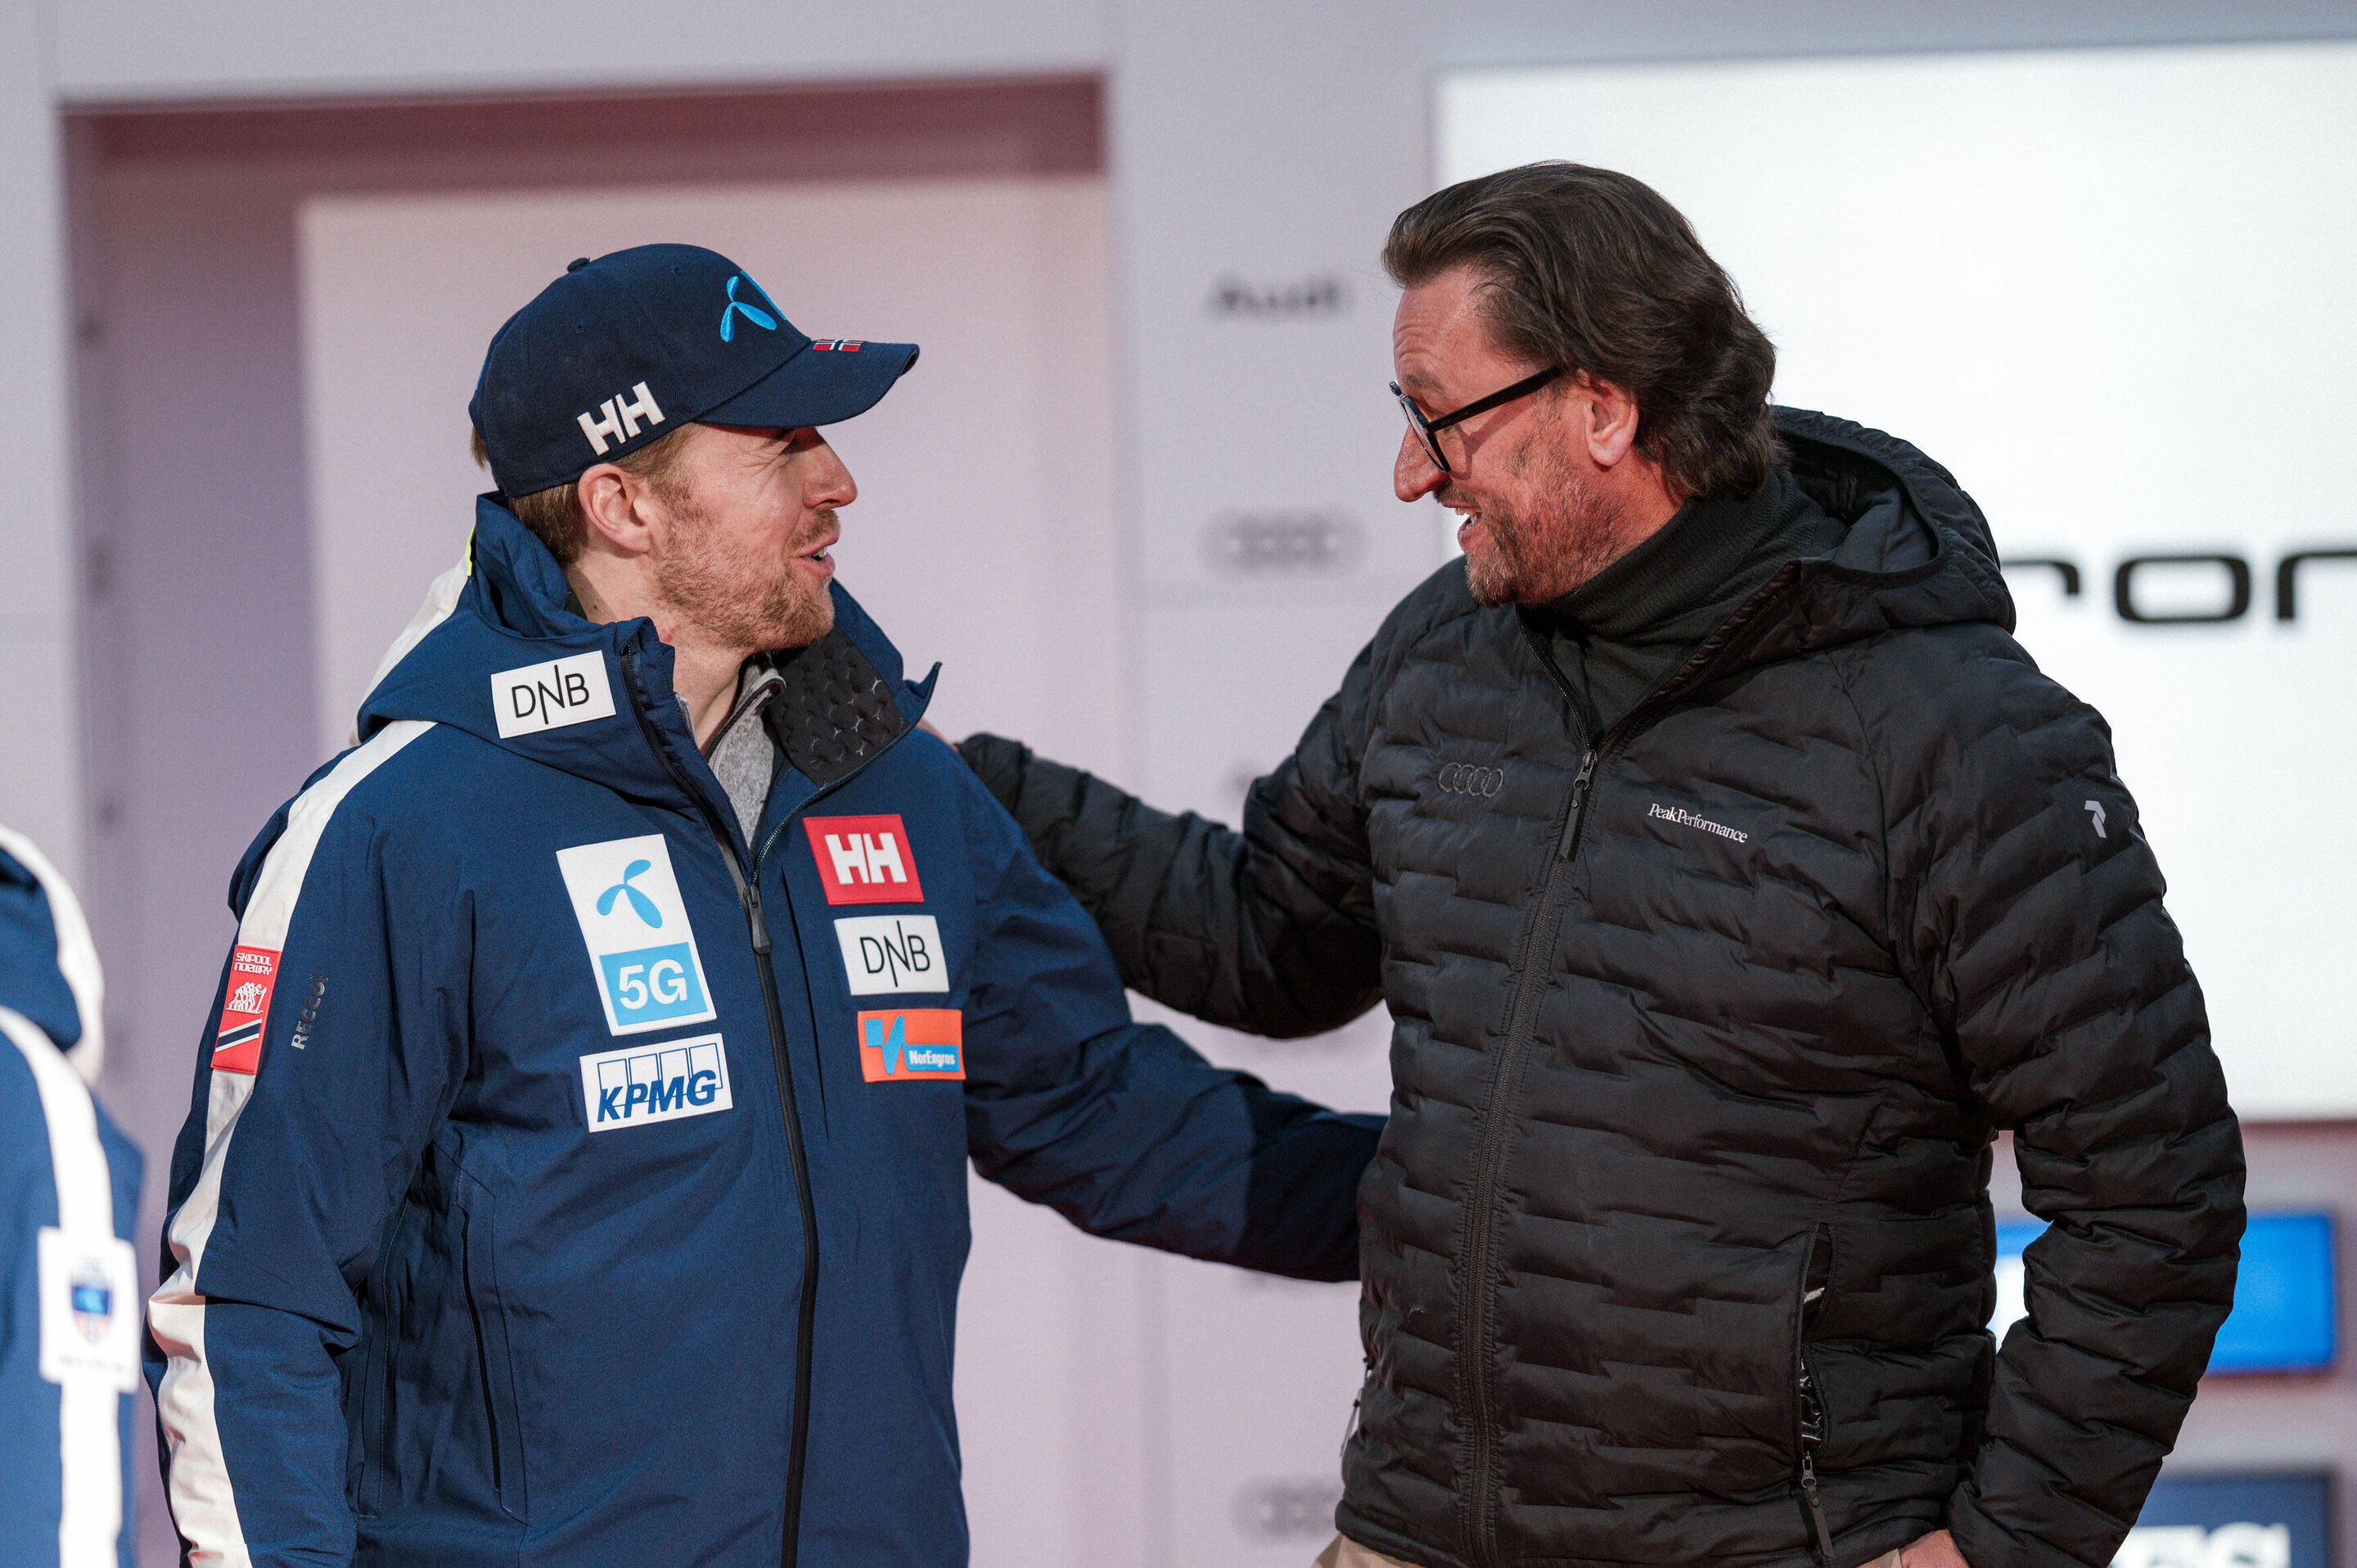 Audi FIS Ski World Cup Sölden 2023